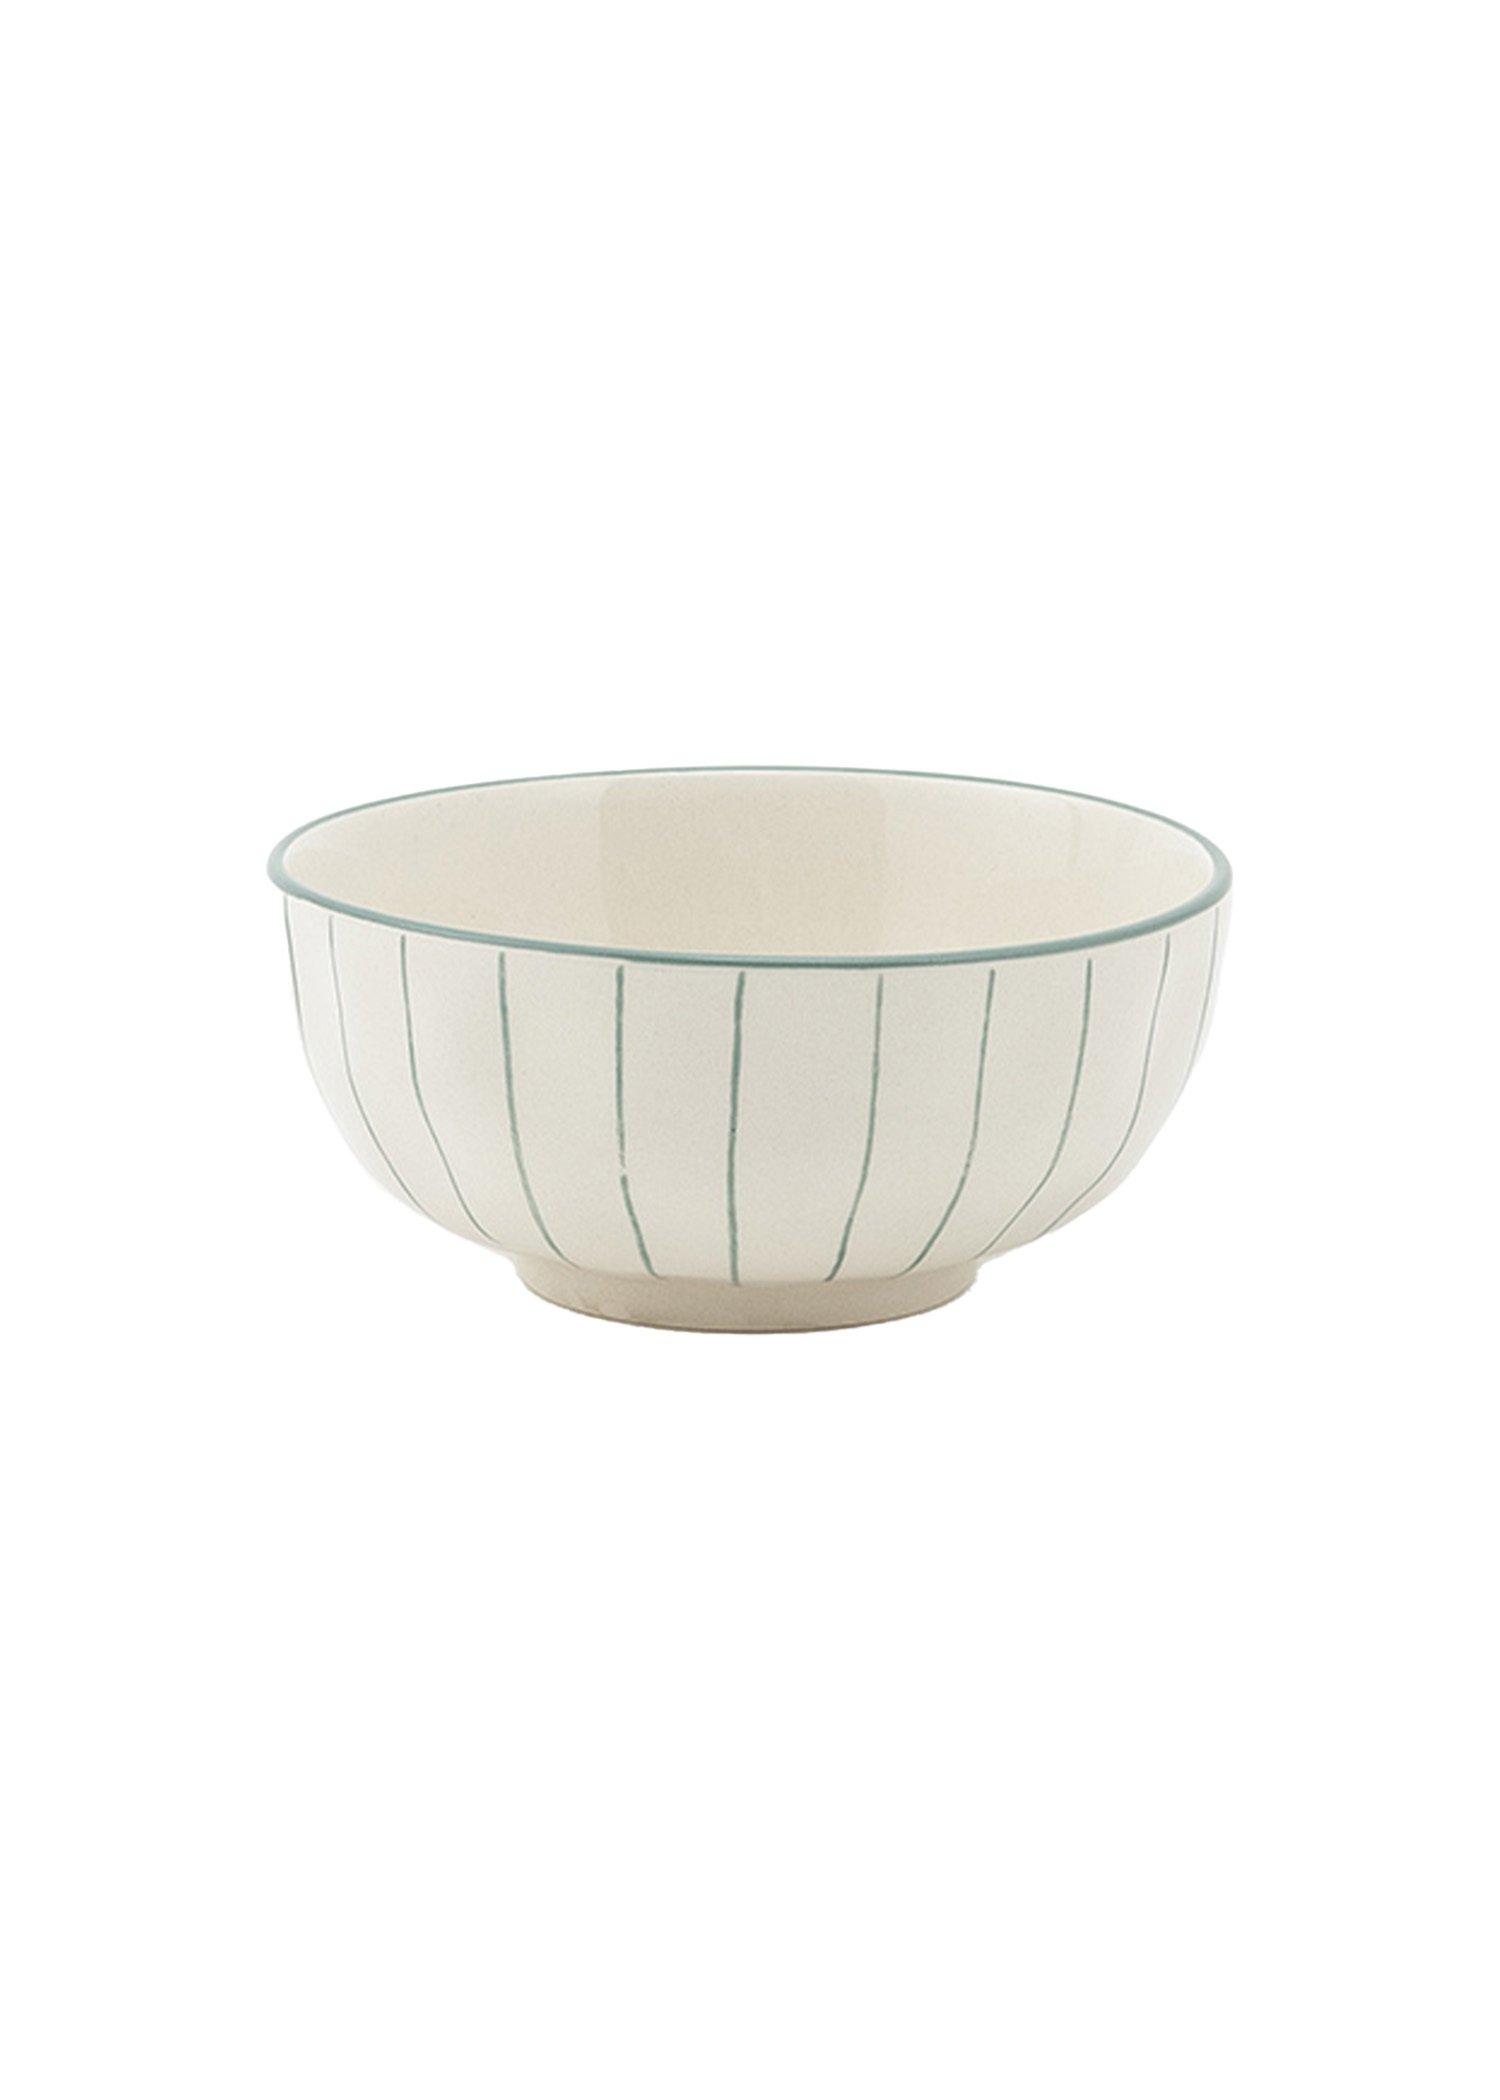 Hand-painted stoneware bowl